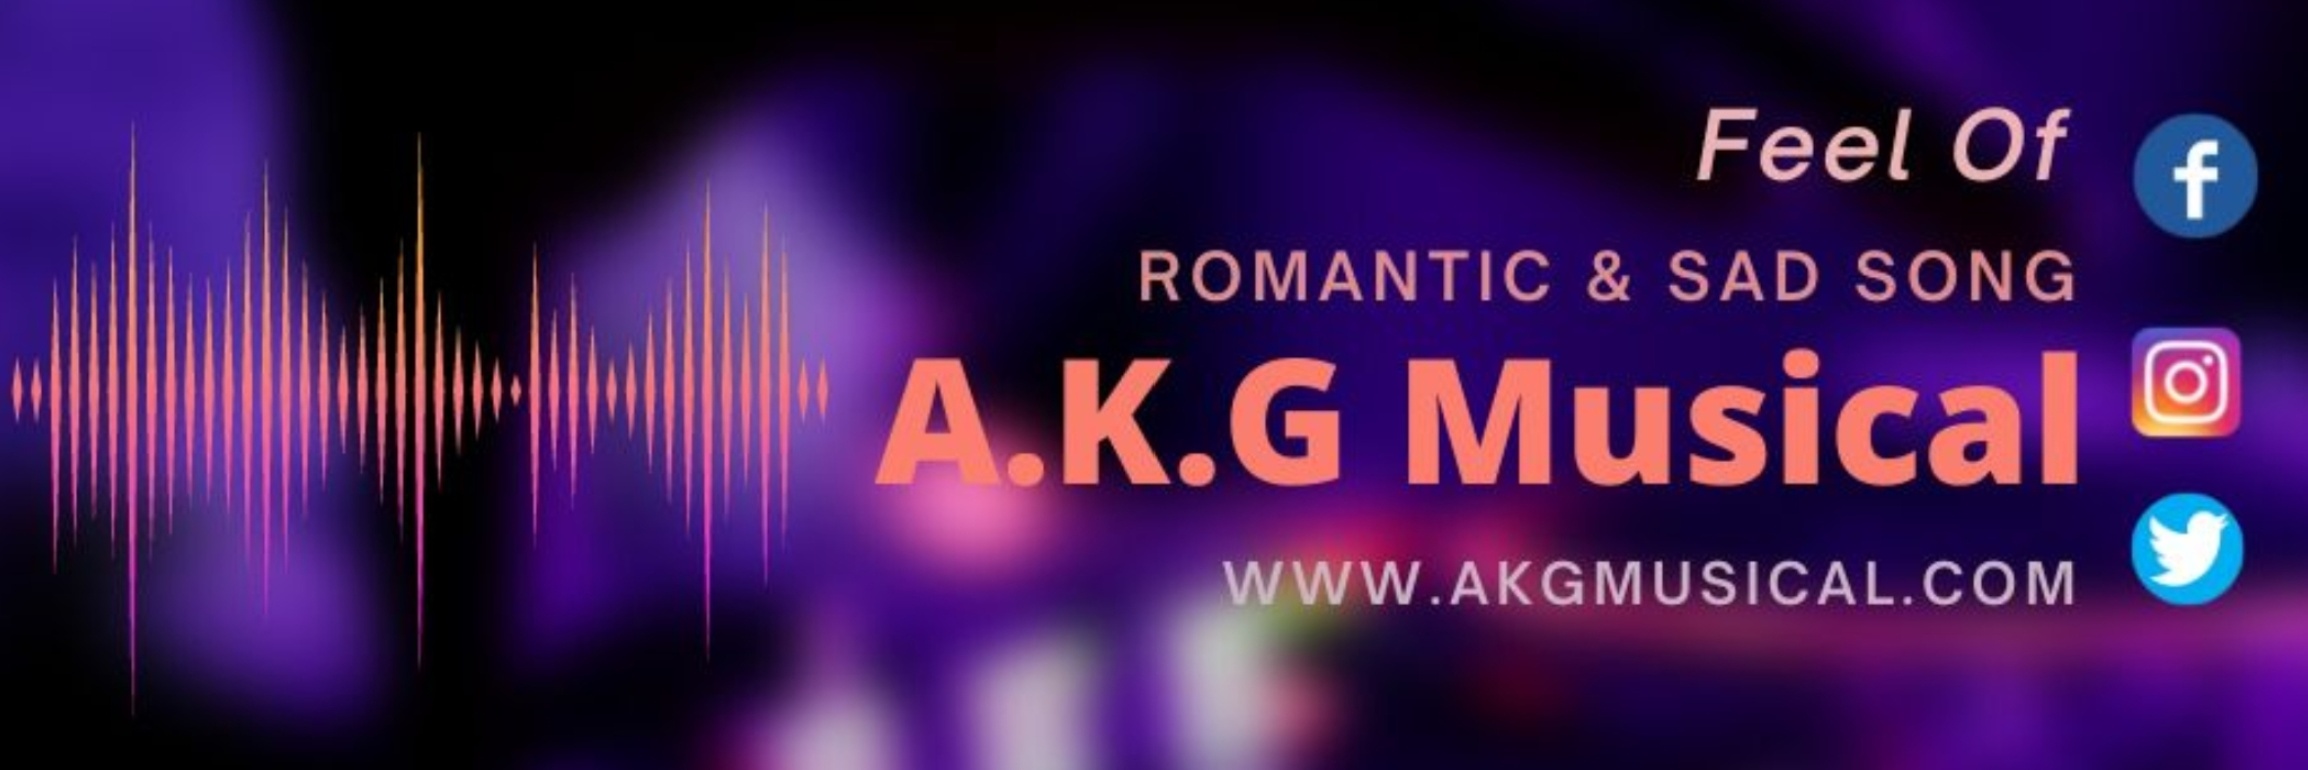 AkgMusical is a Hindi Song Lyrics Website